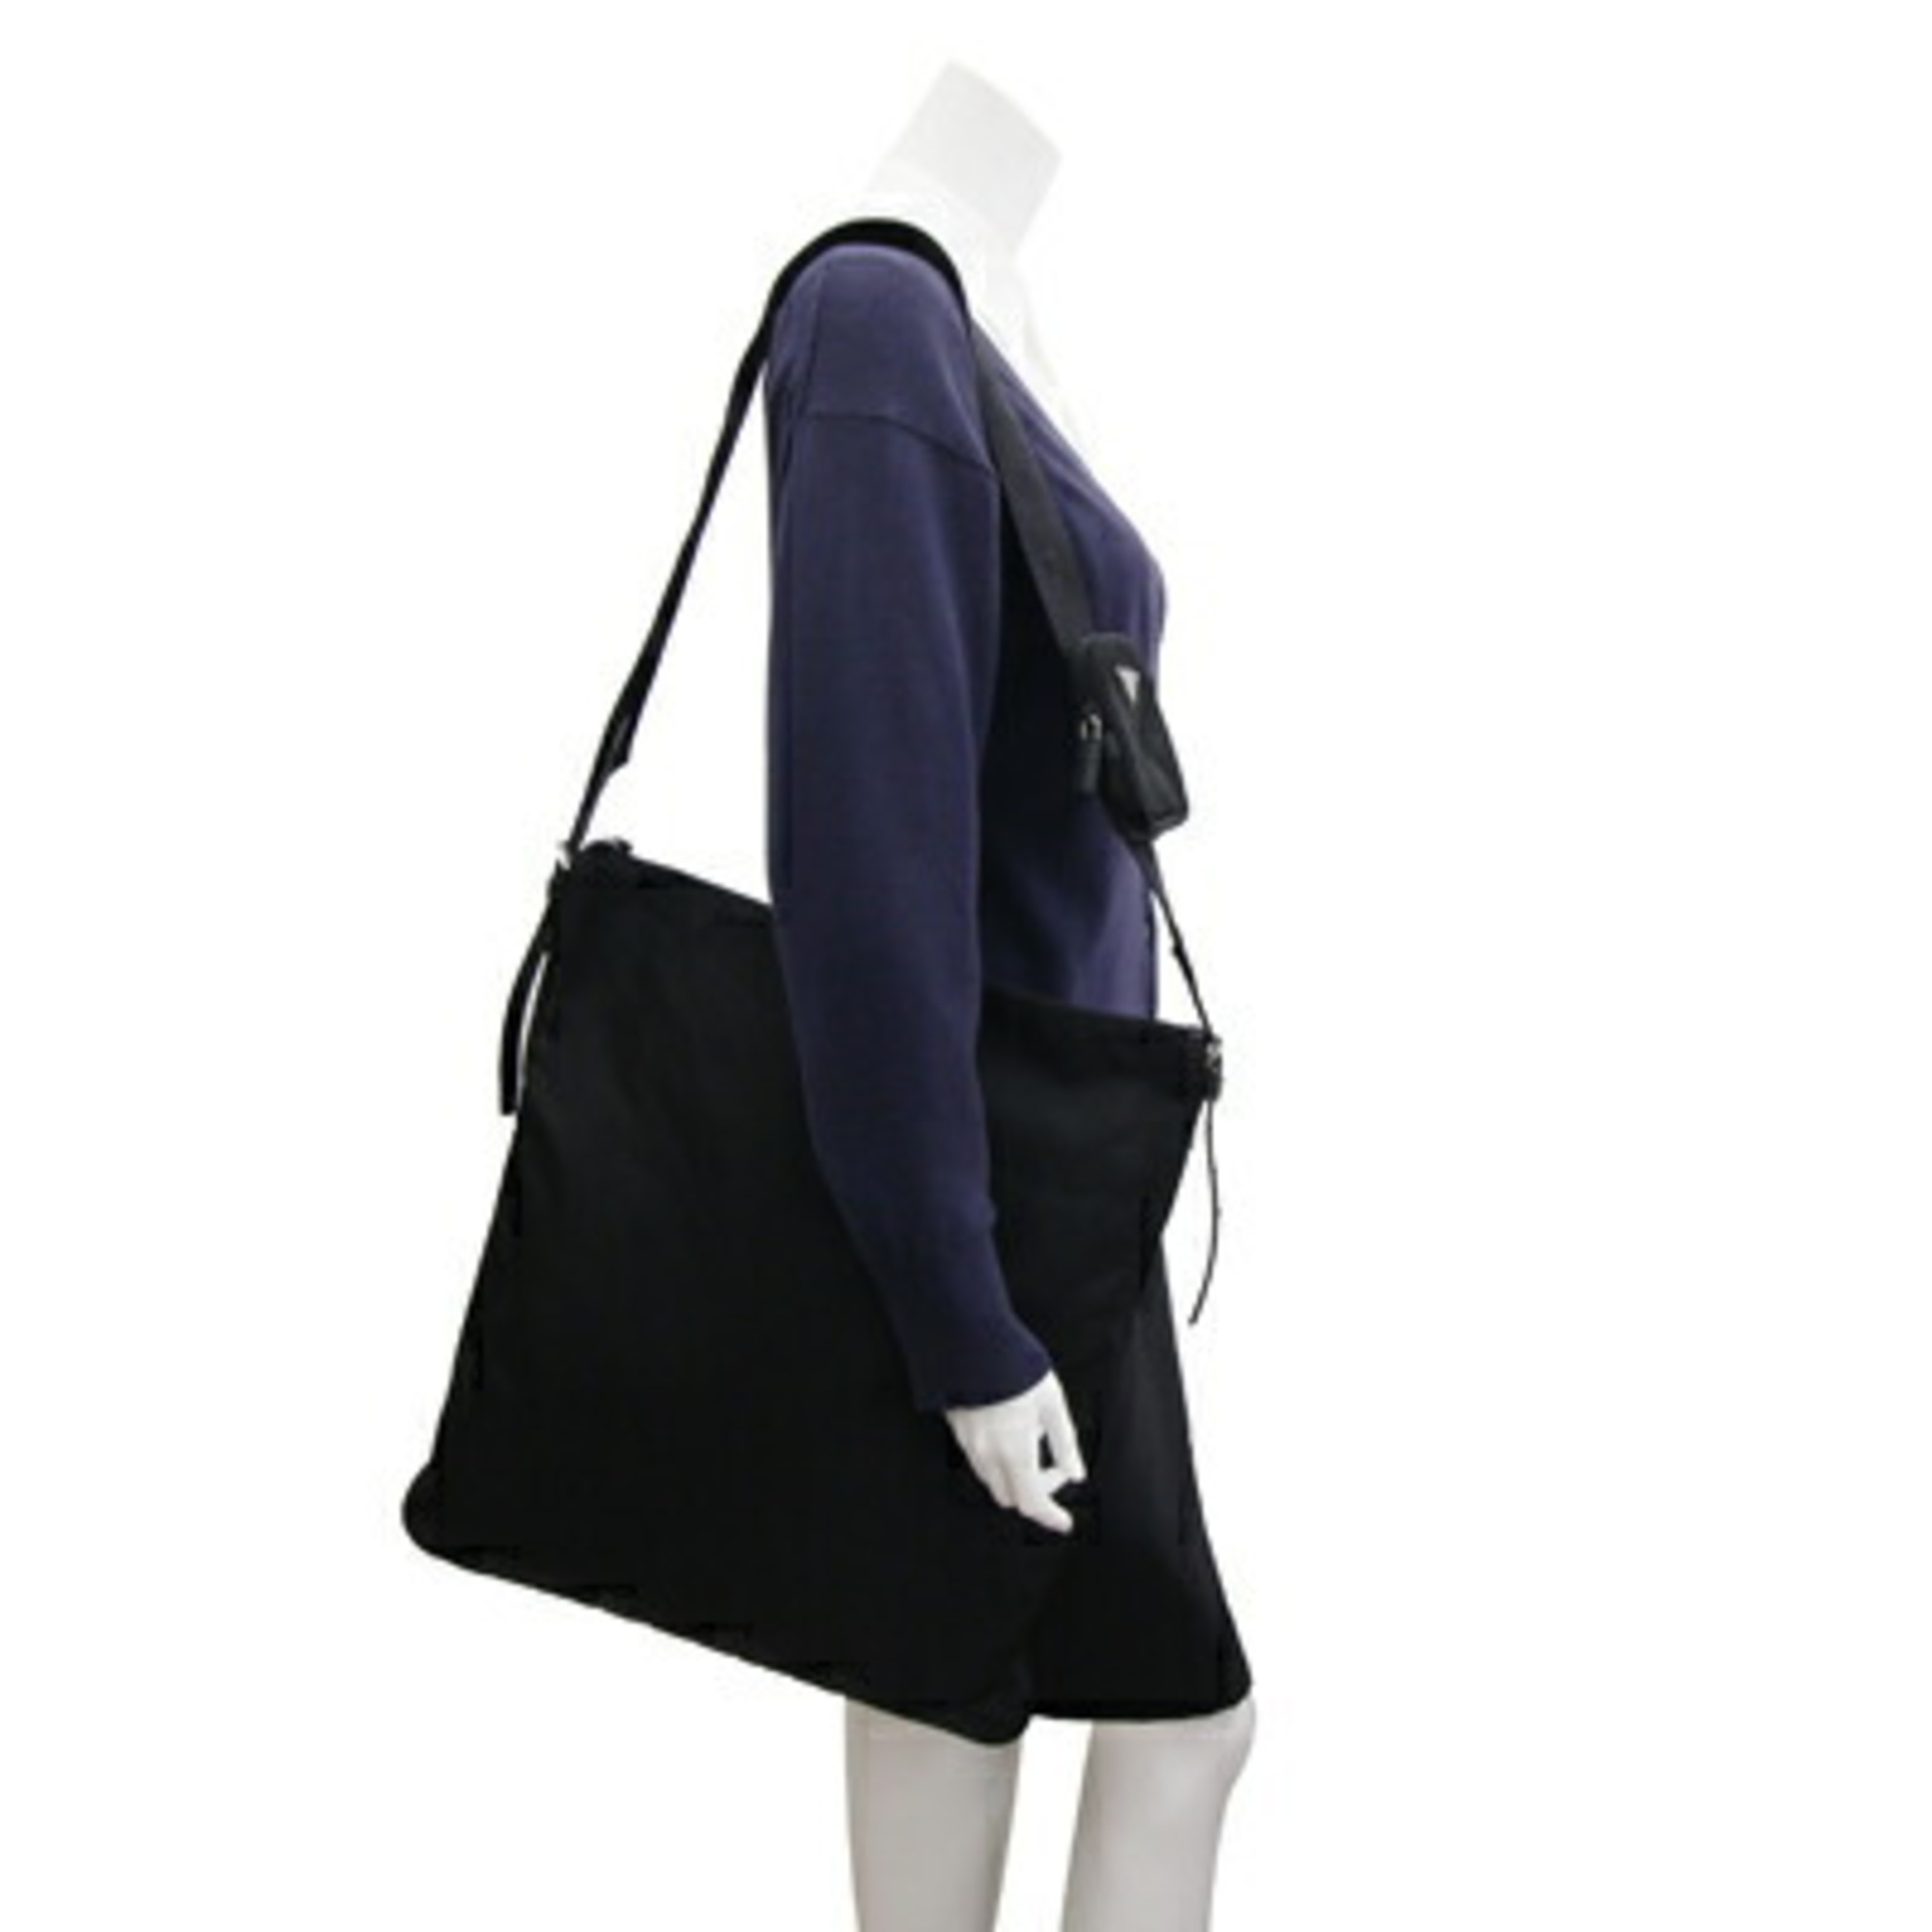 Prada shoulder bag 2VH123 black nylon leather no gusset men's PRADA